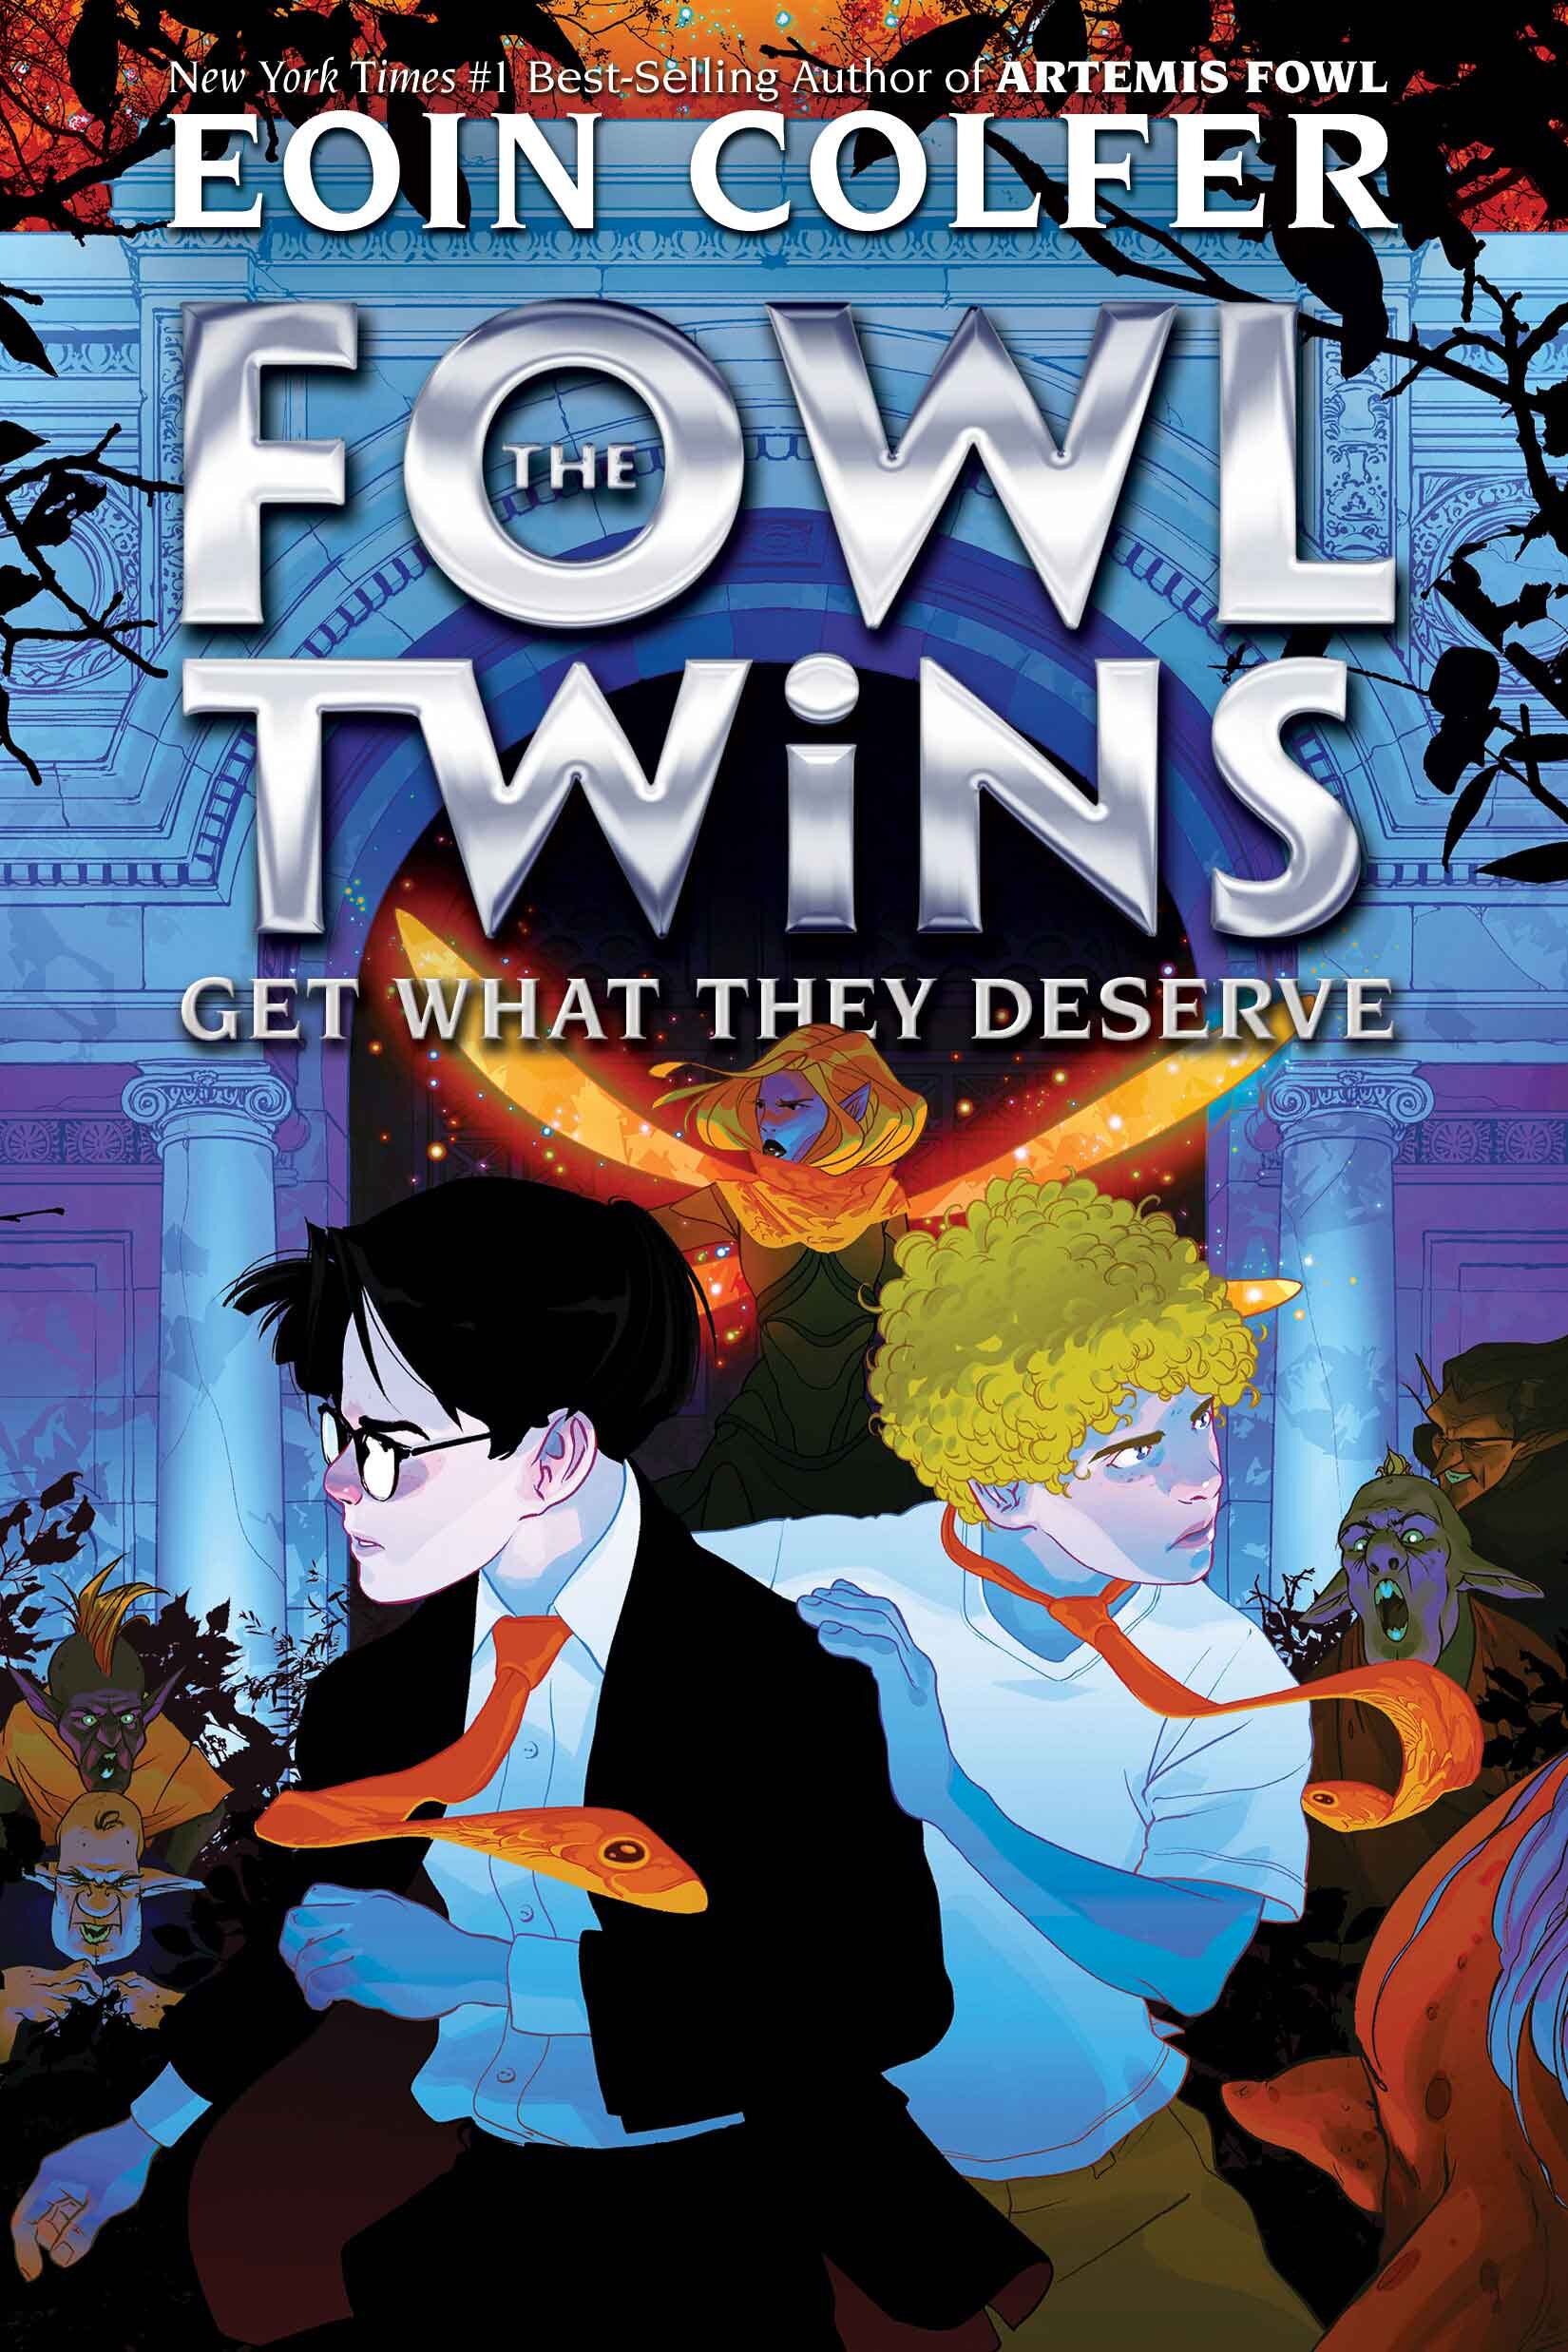 Artemis Fowl: Disney Movie Tie-In Edition (Artemis Fowl, Book 1) by Eoin  Colfer